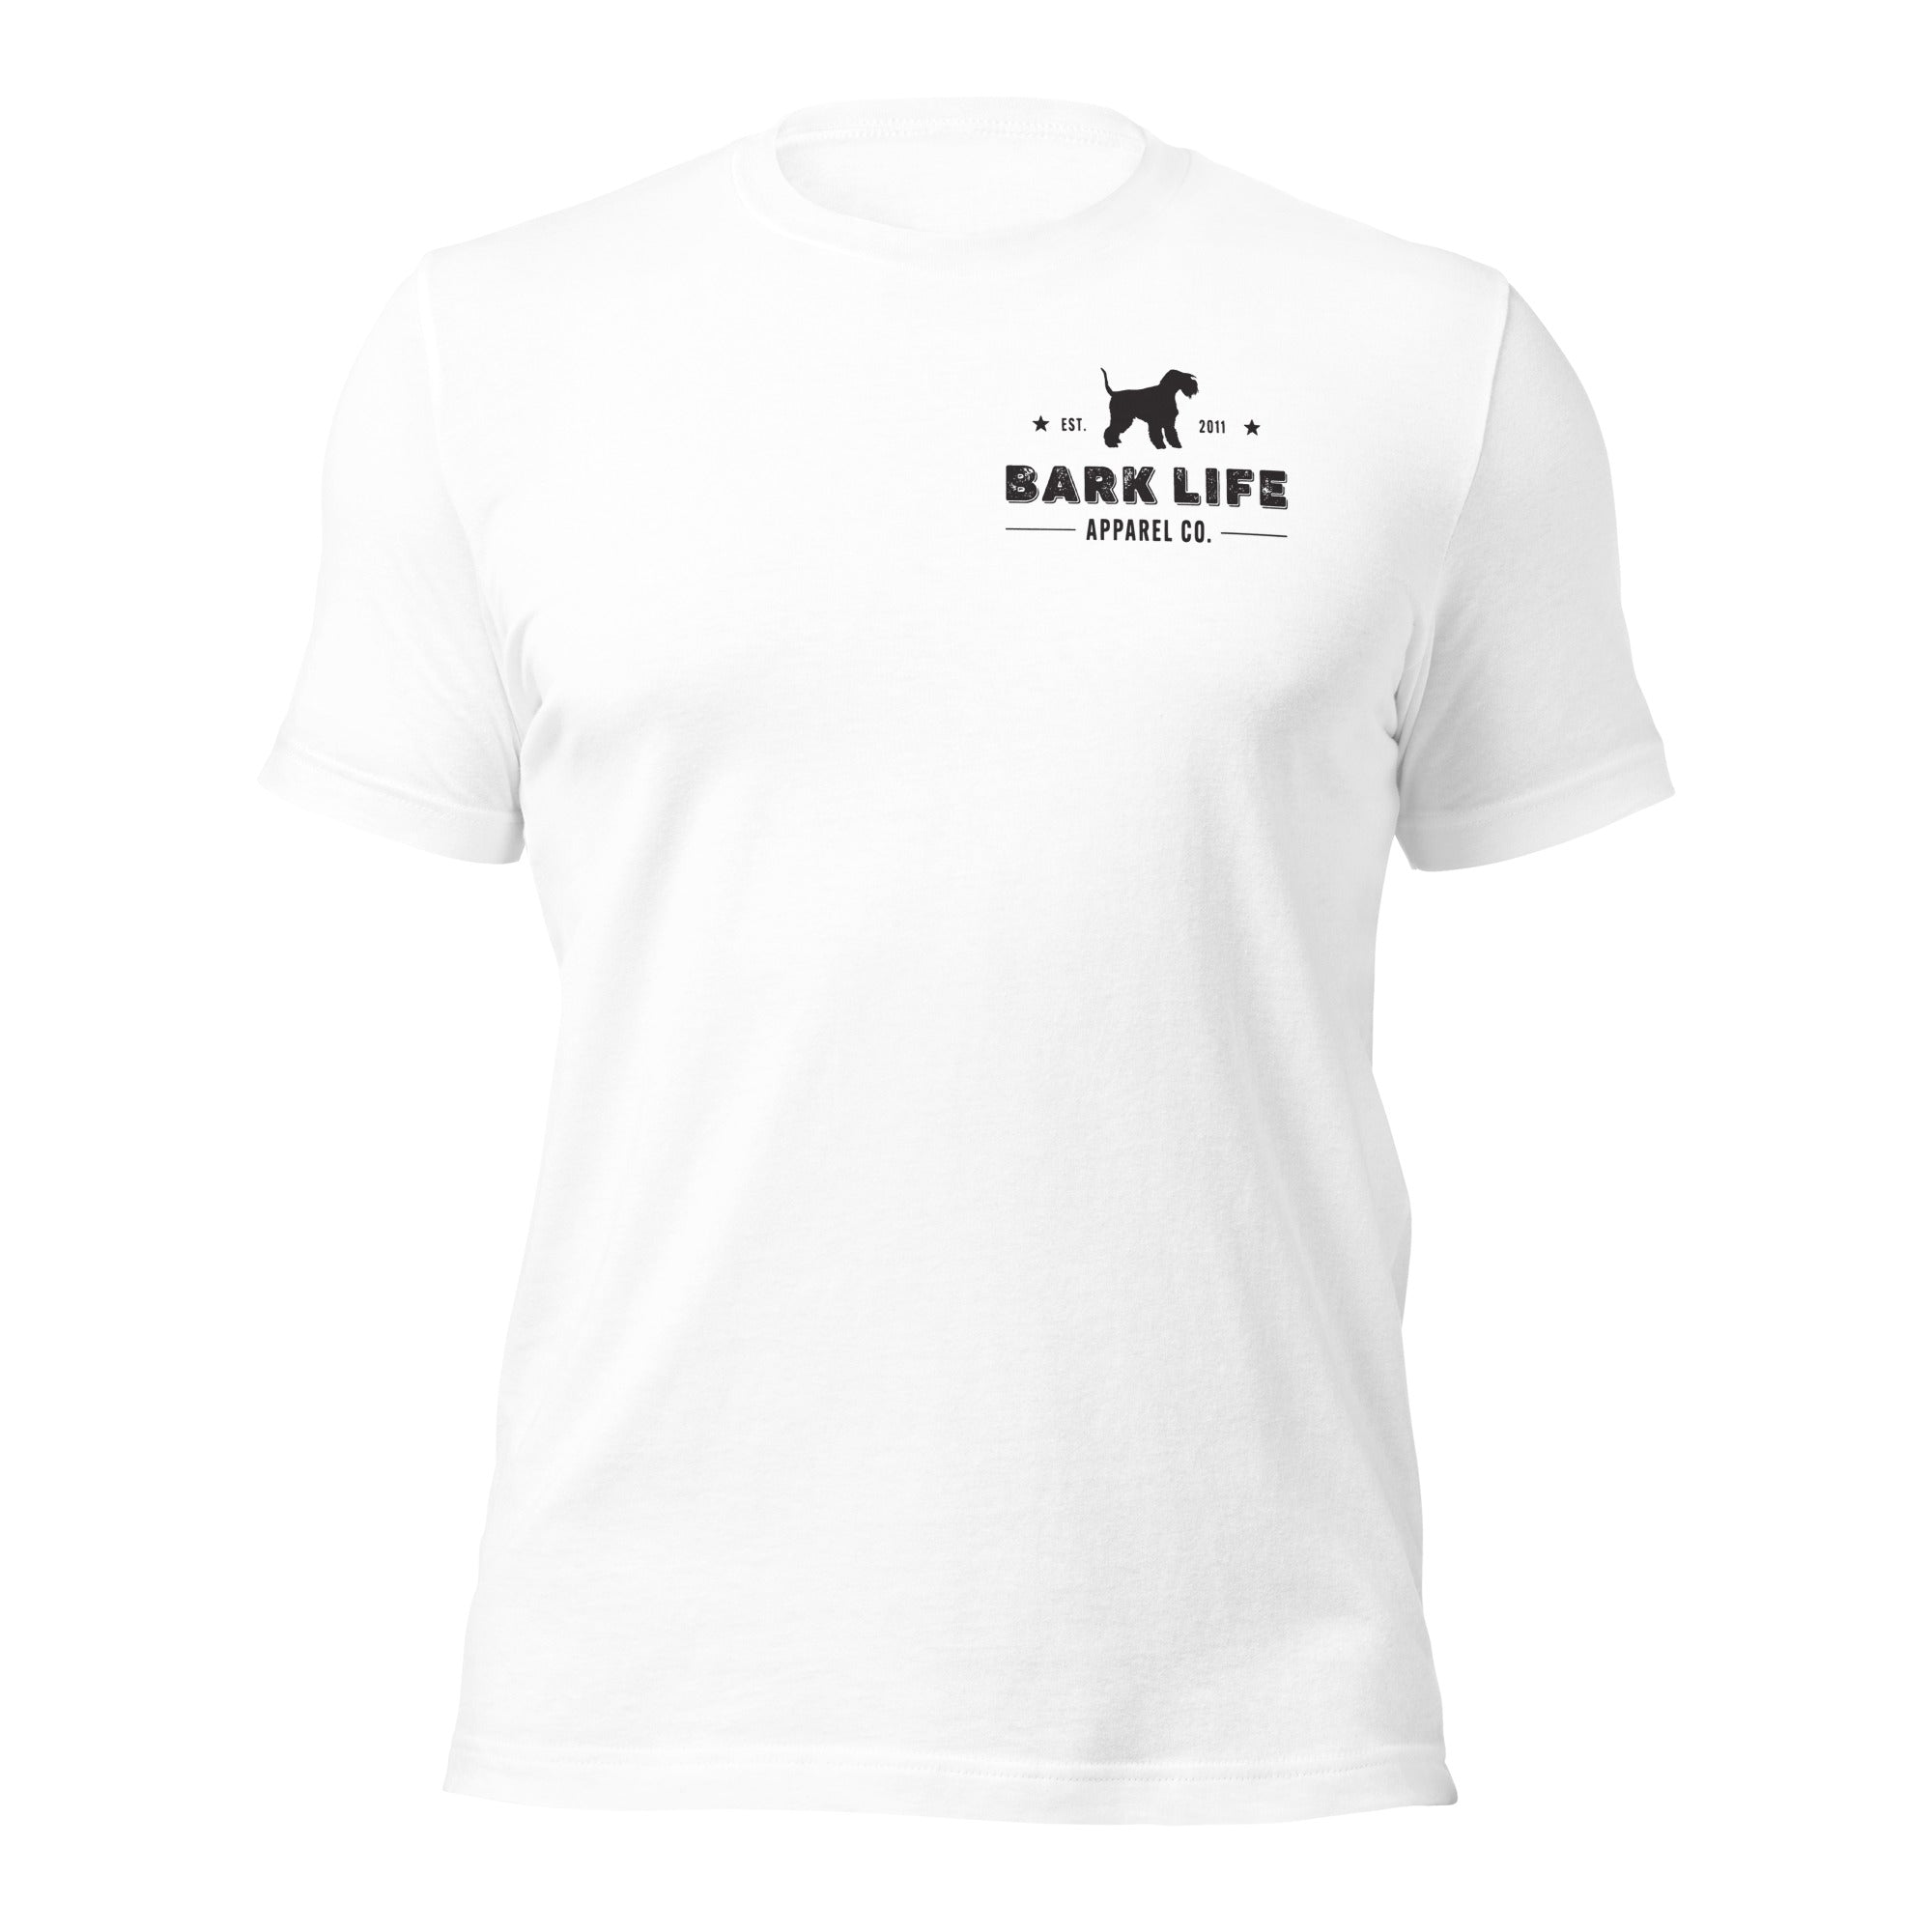 Lakeland Terrier - Short Sleeve Cotton Tee Shirt